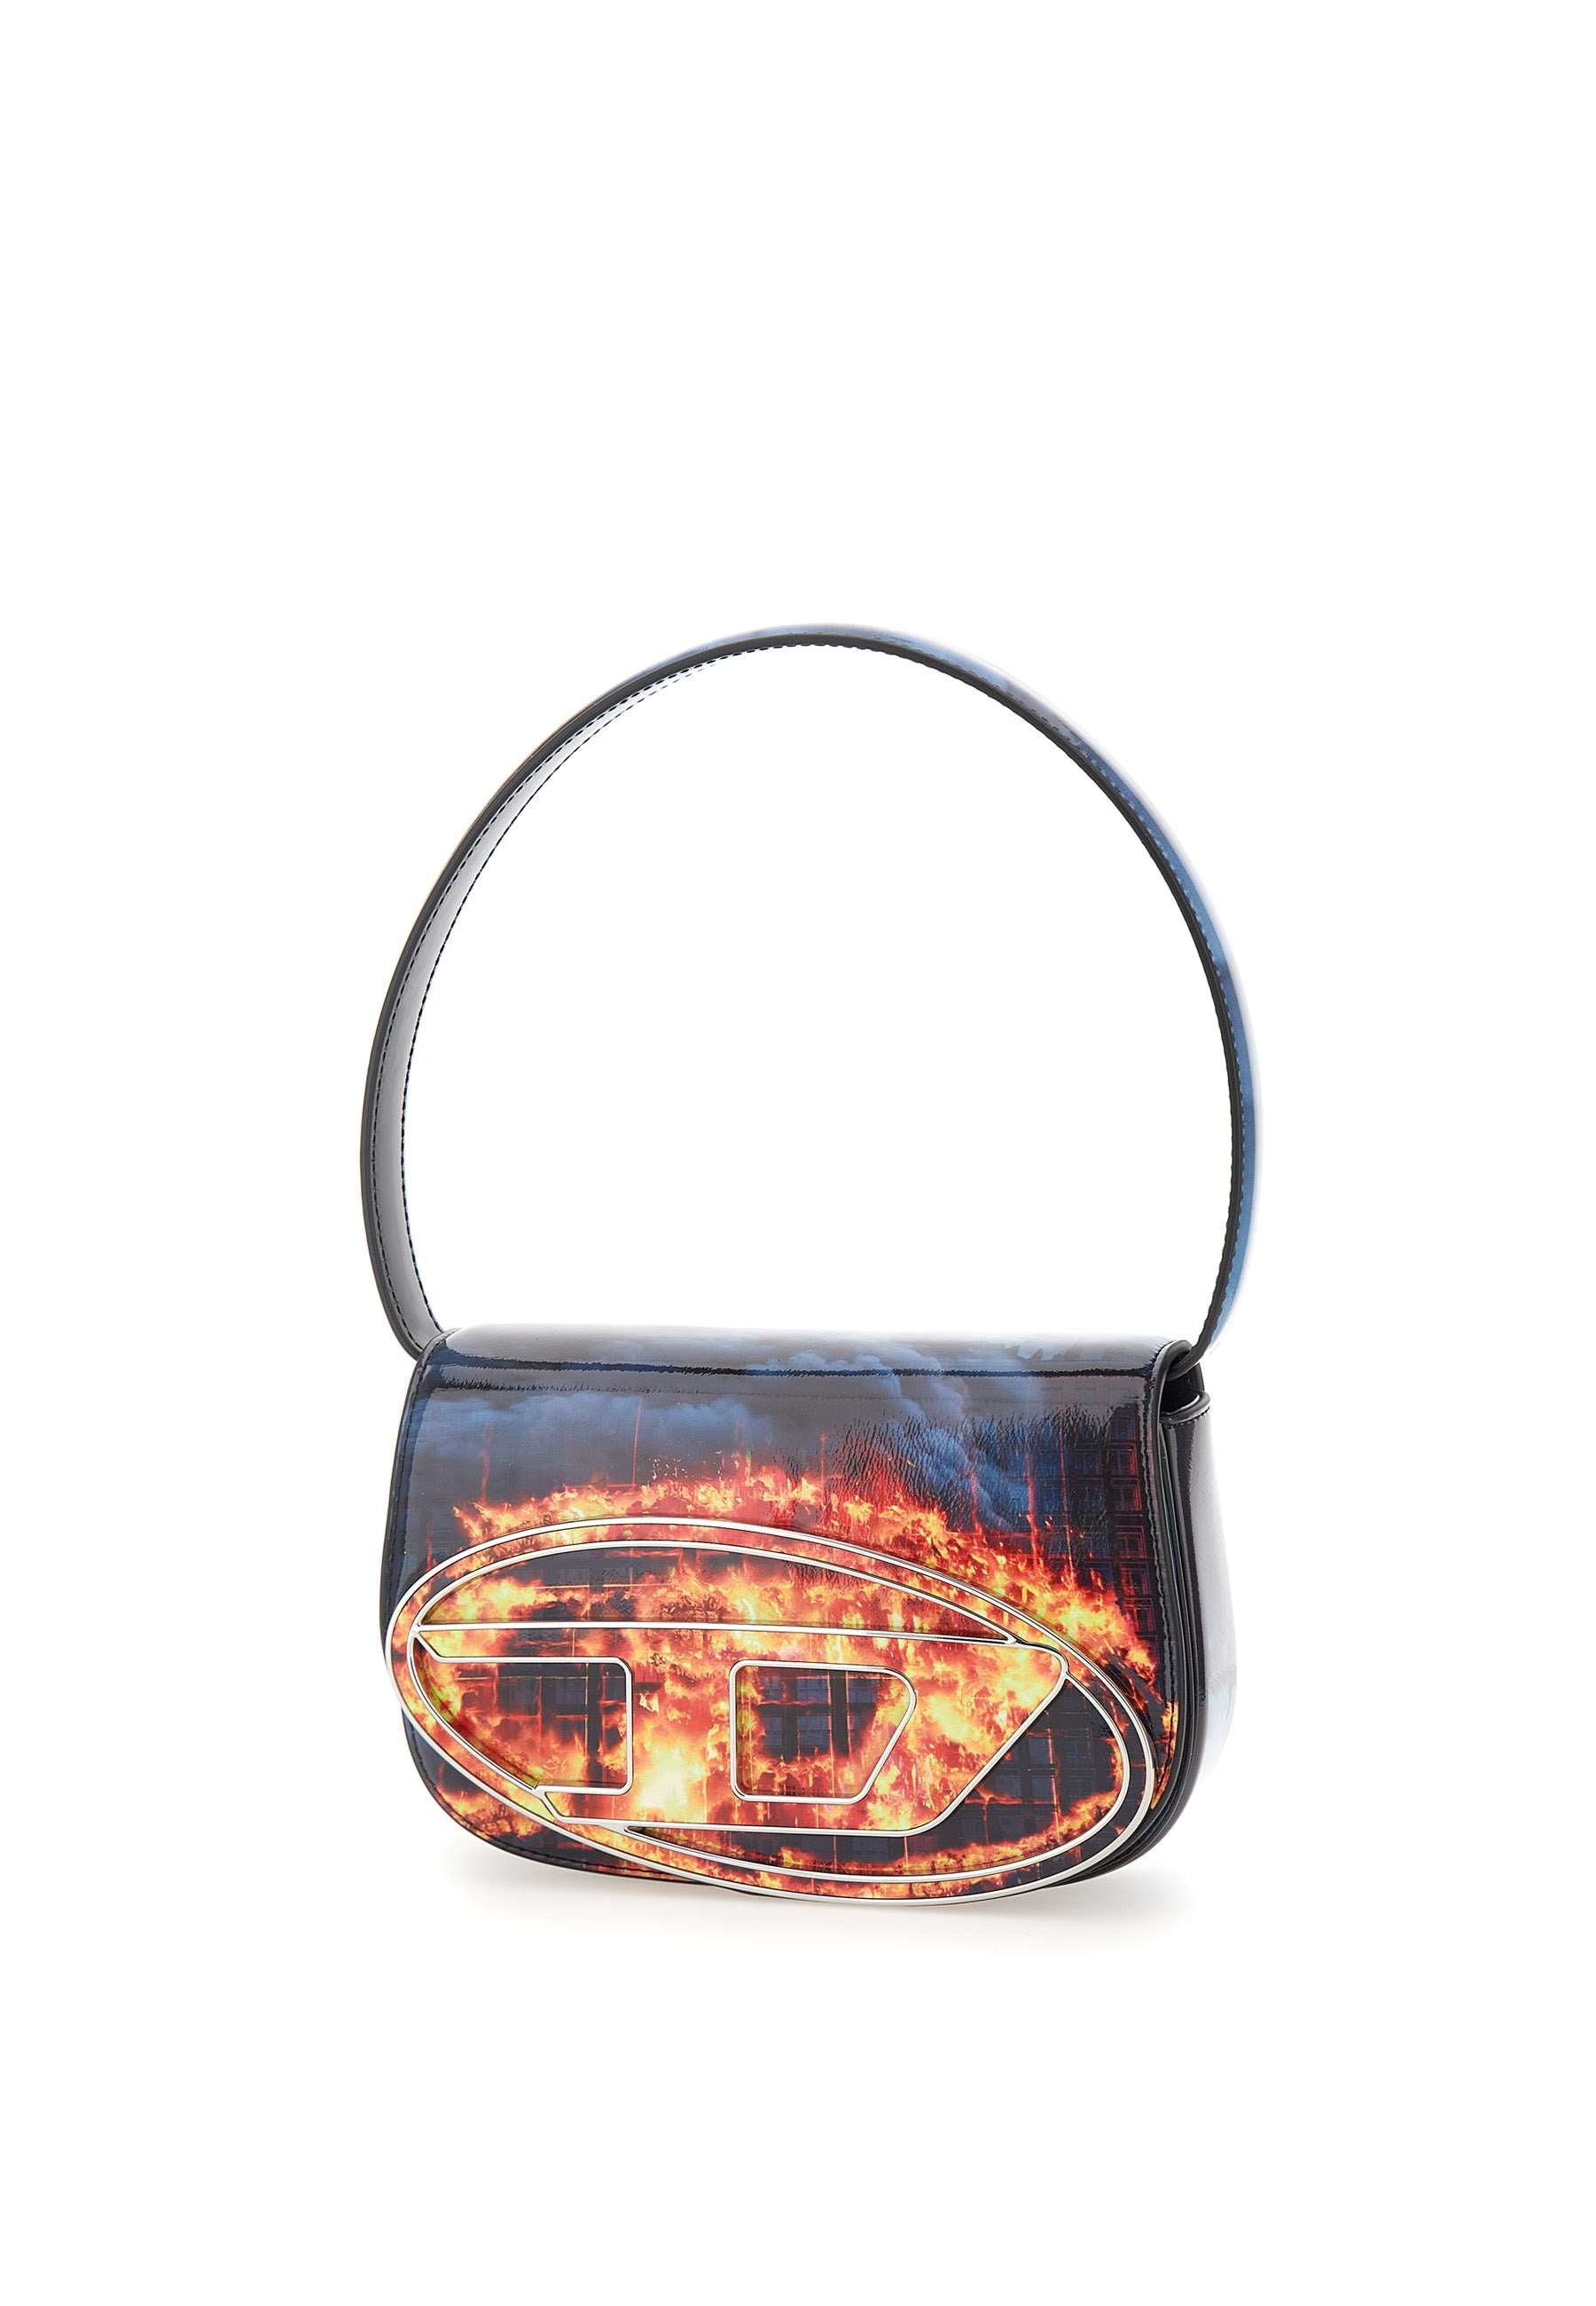 Diesel 1dr Patent Leather Shoulder Bag Sky And Fire Pattern - 5